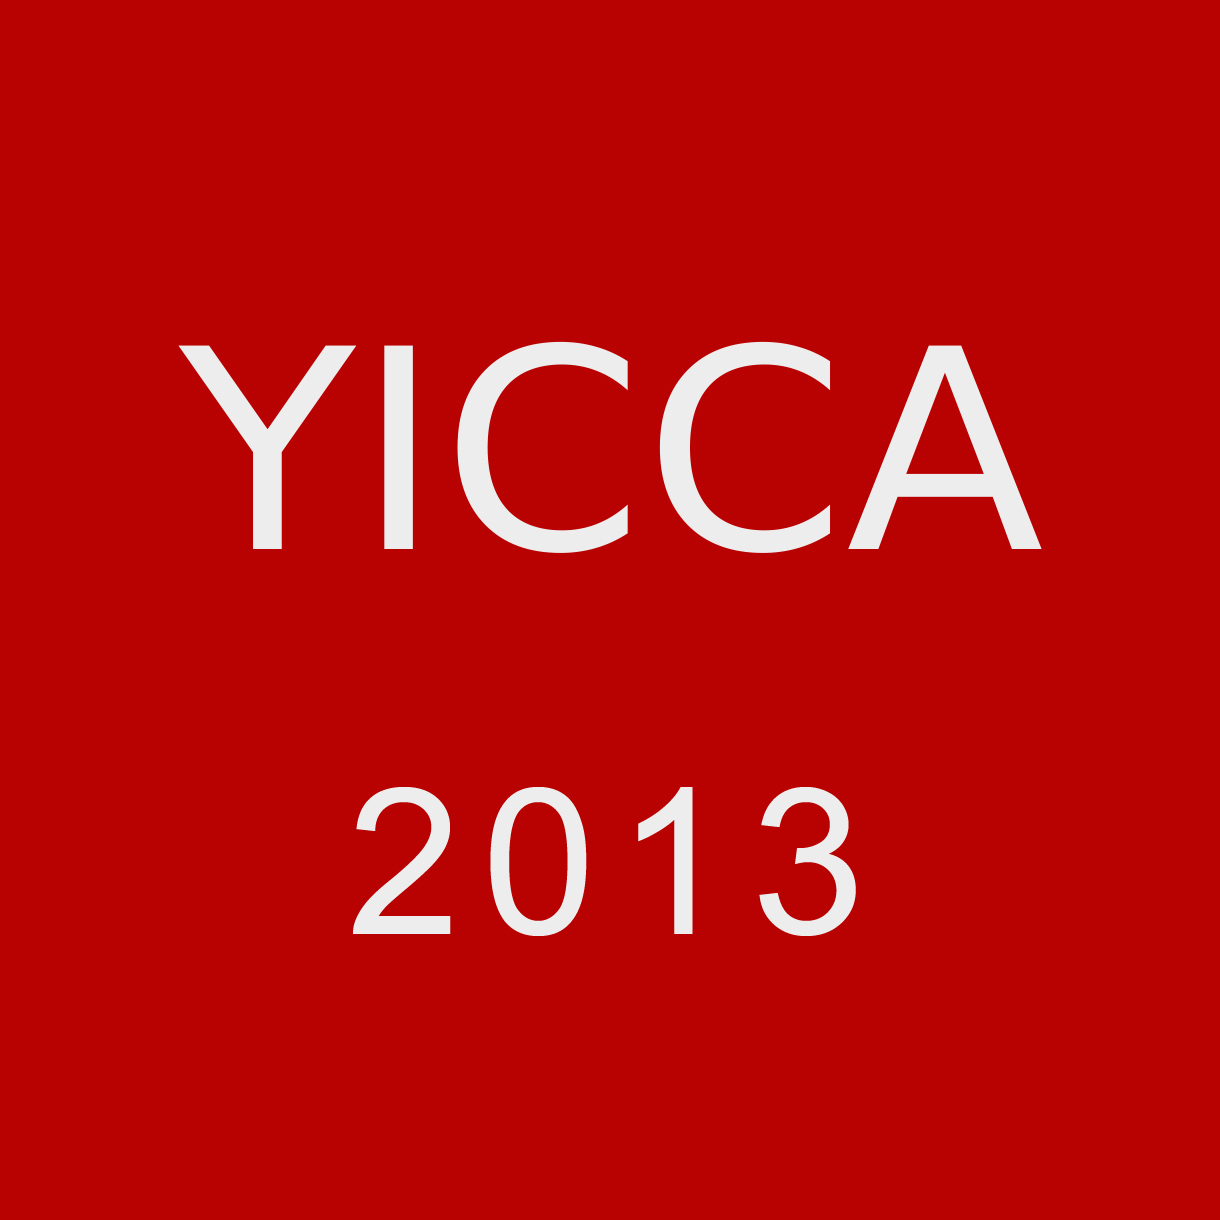 Yicca-logo-2013